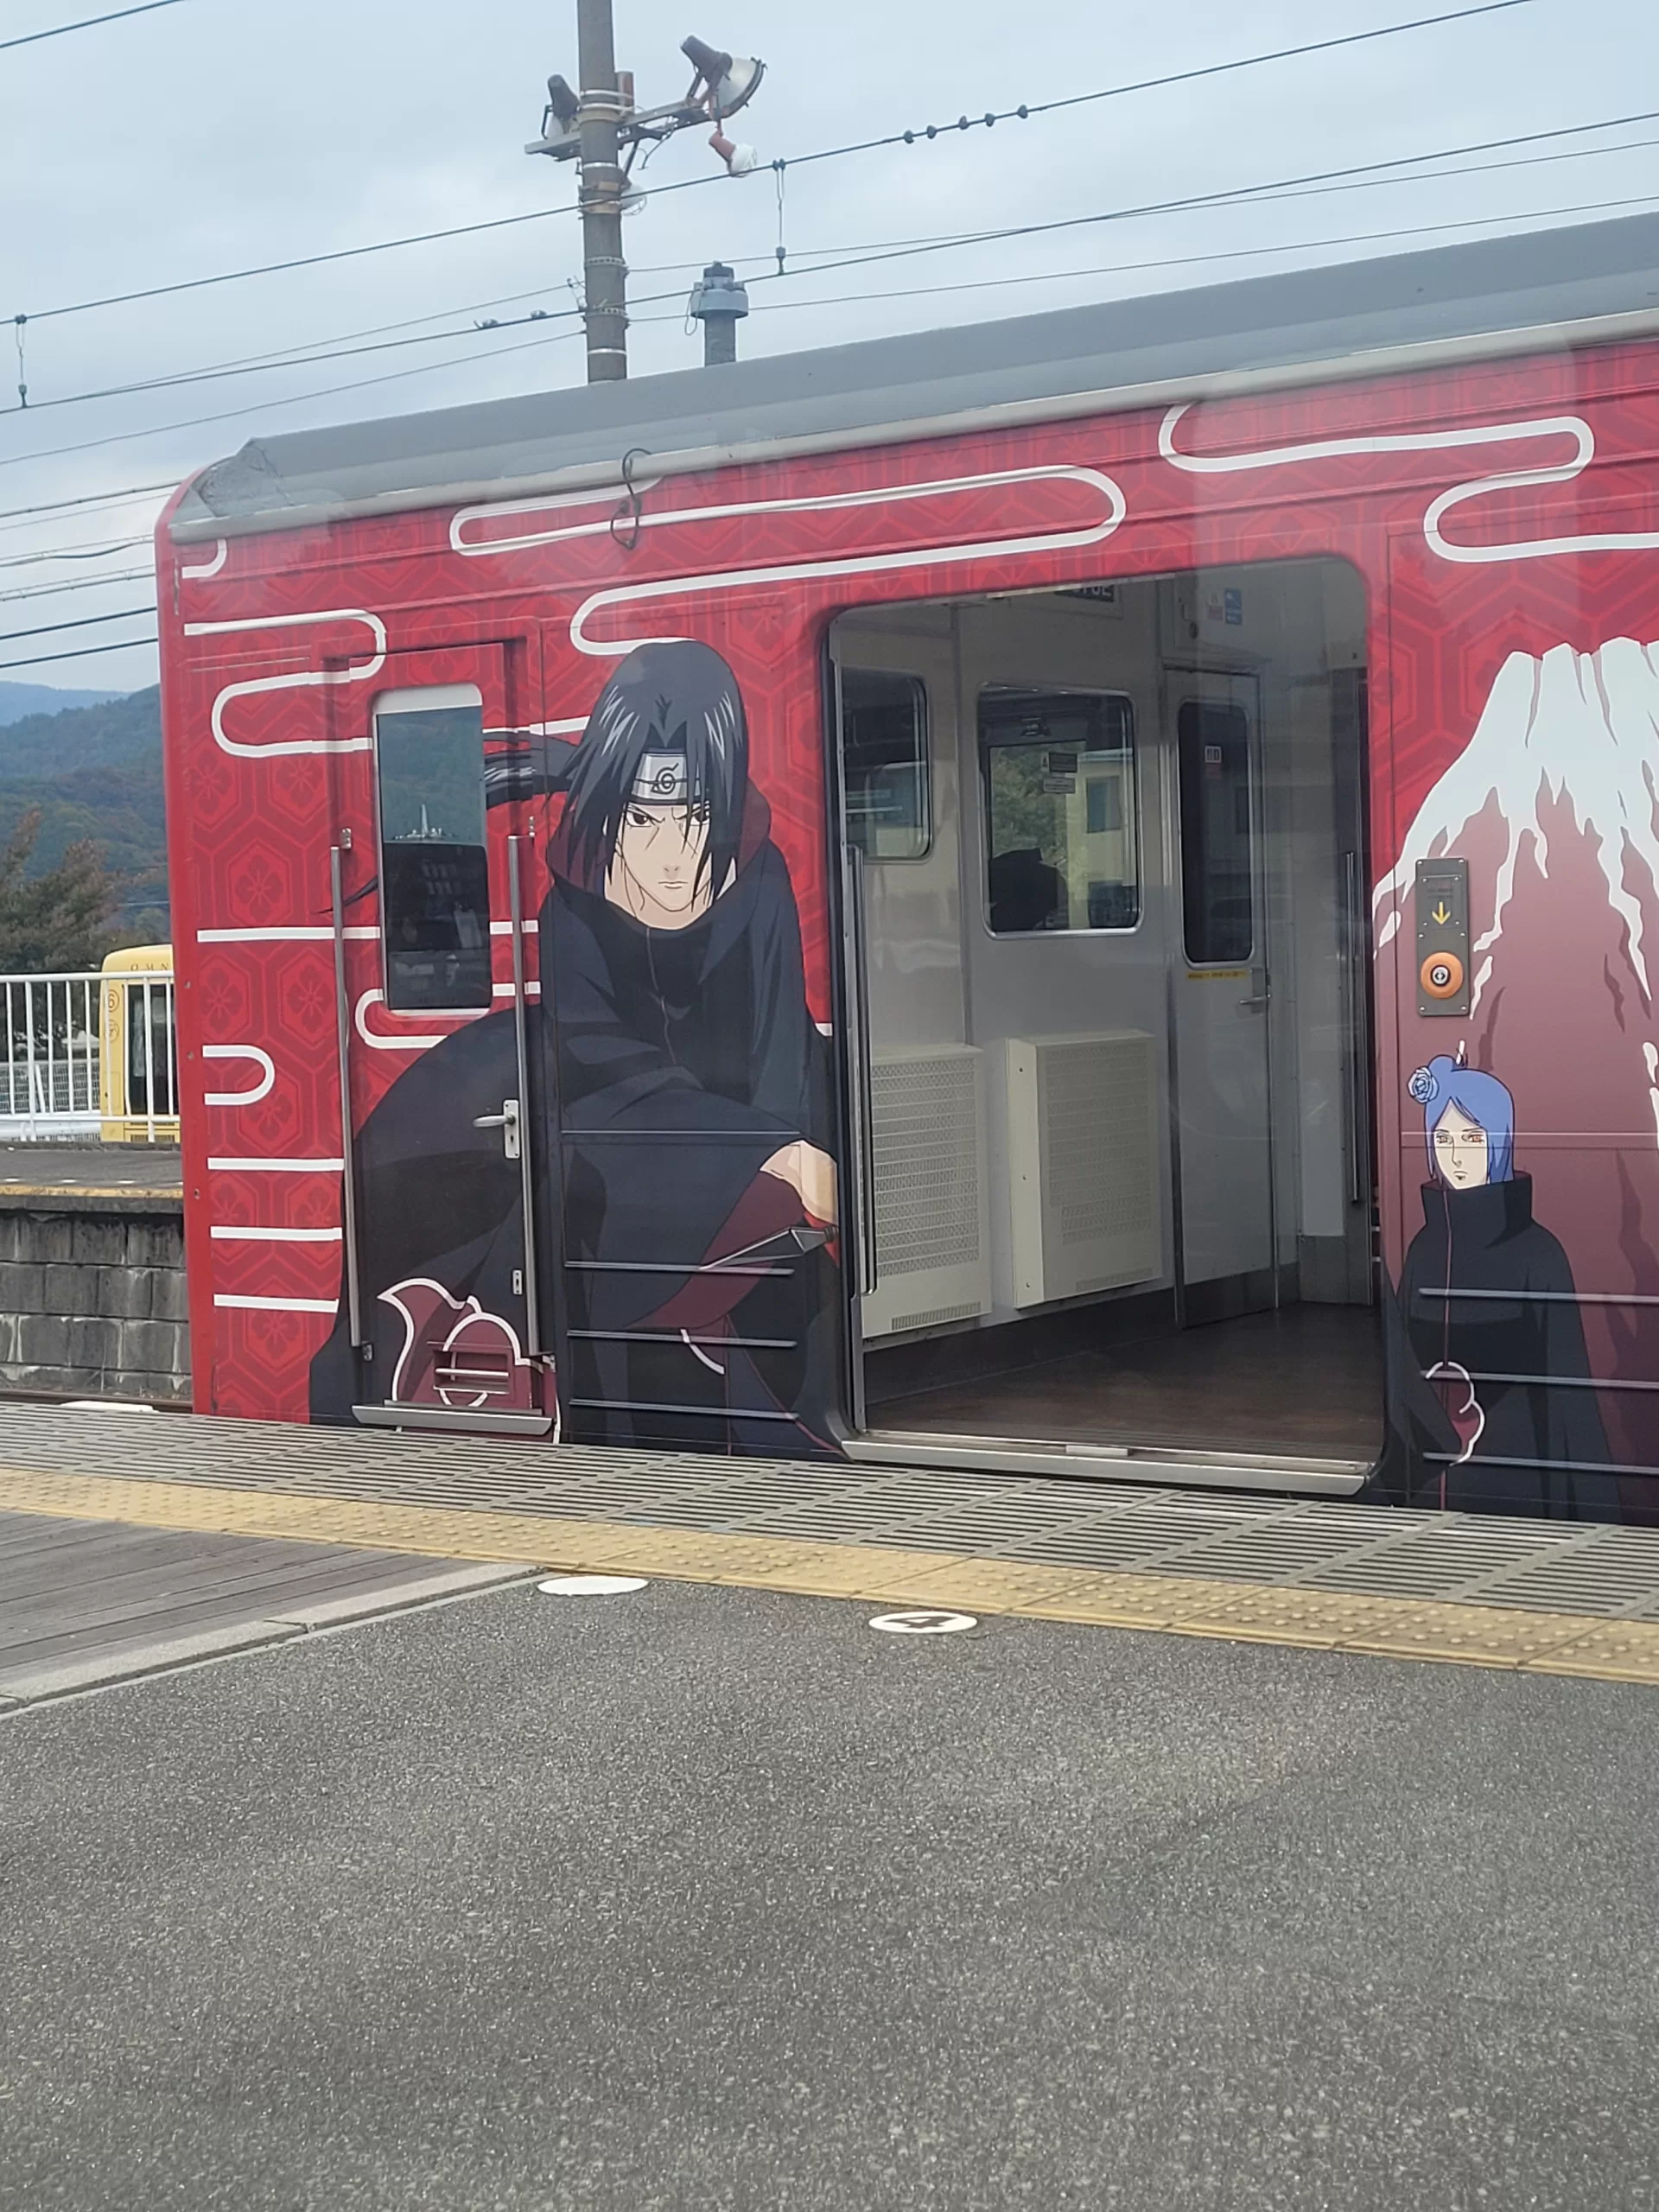 Japan’s themed trains break the monotony of public transport